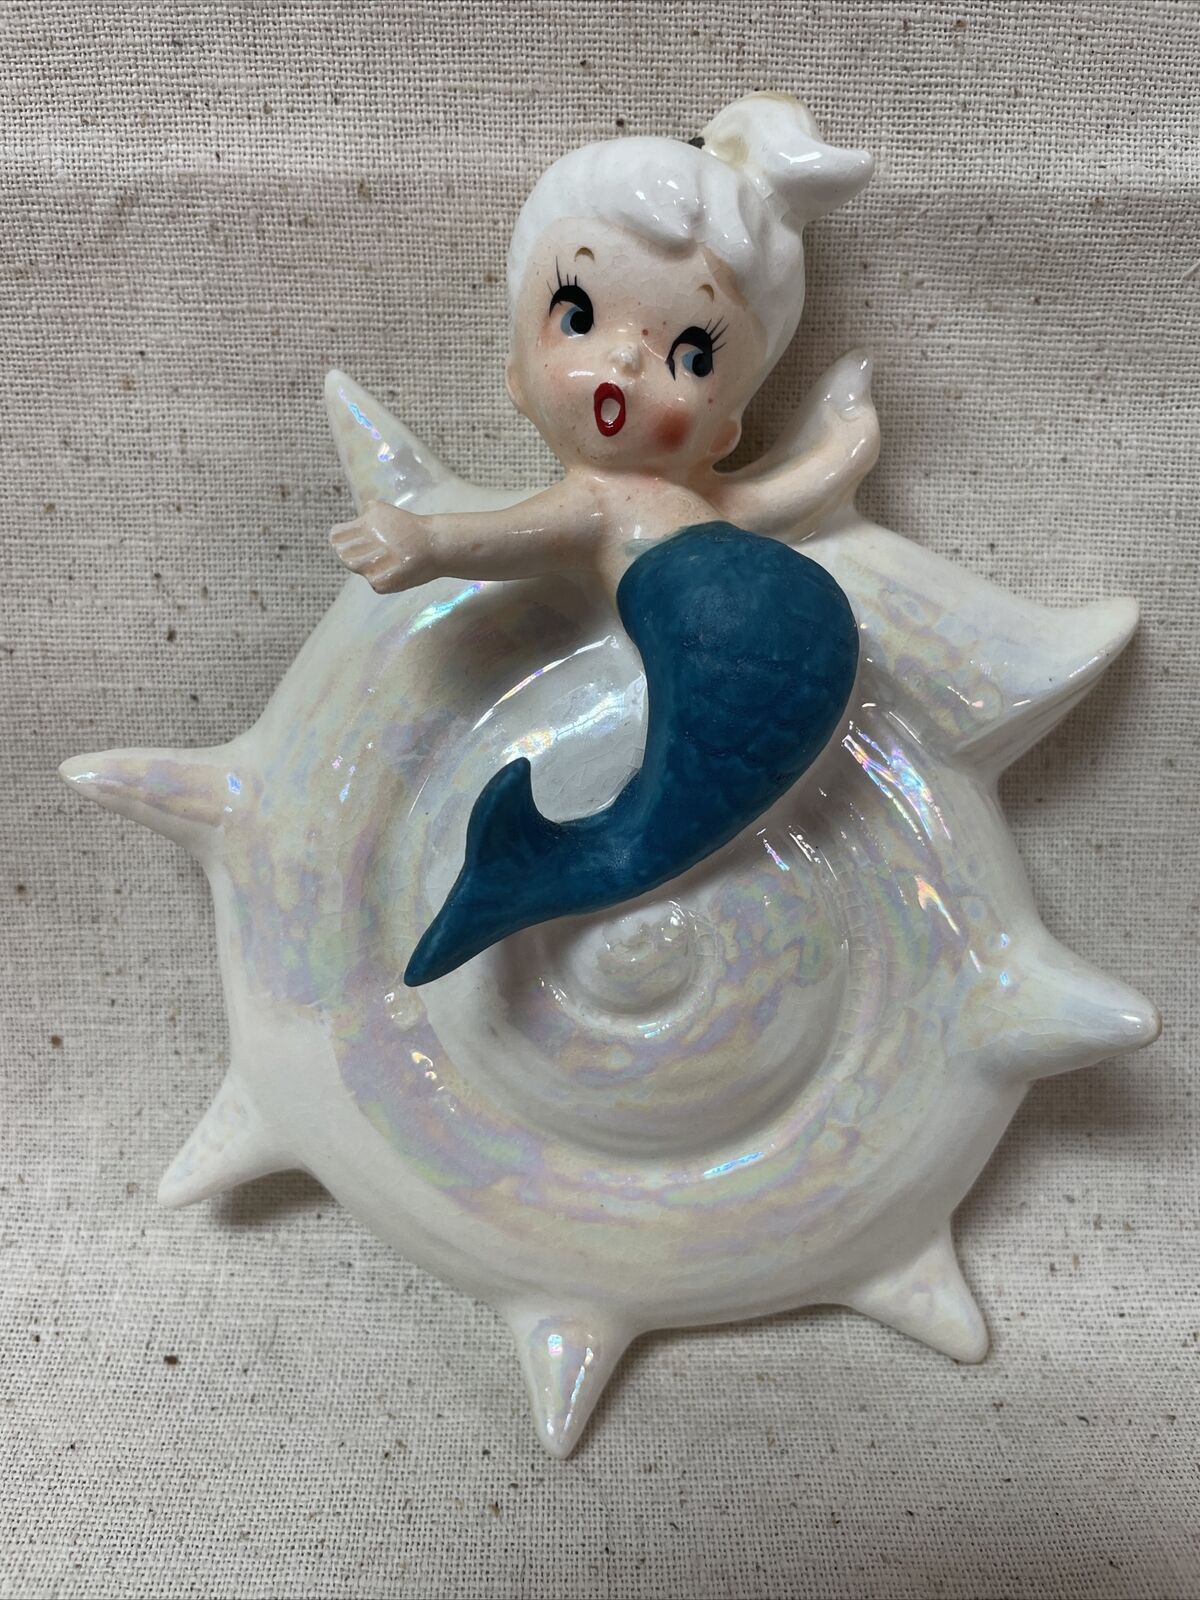 Vintage Lefton Ceramic Wall Art Plaque Mermaid Figurine Opalescent Shell Japan